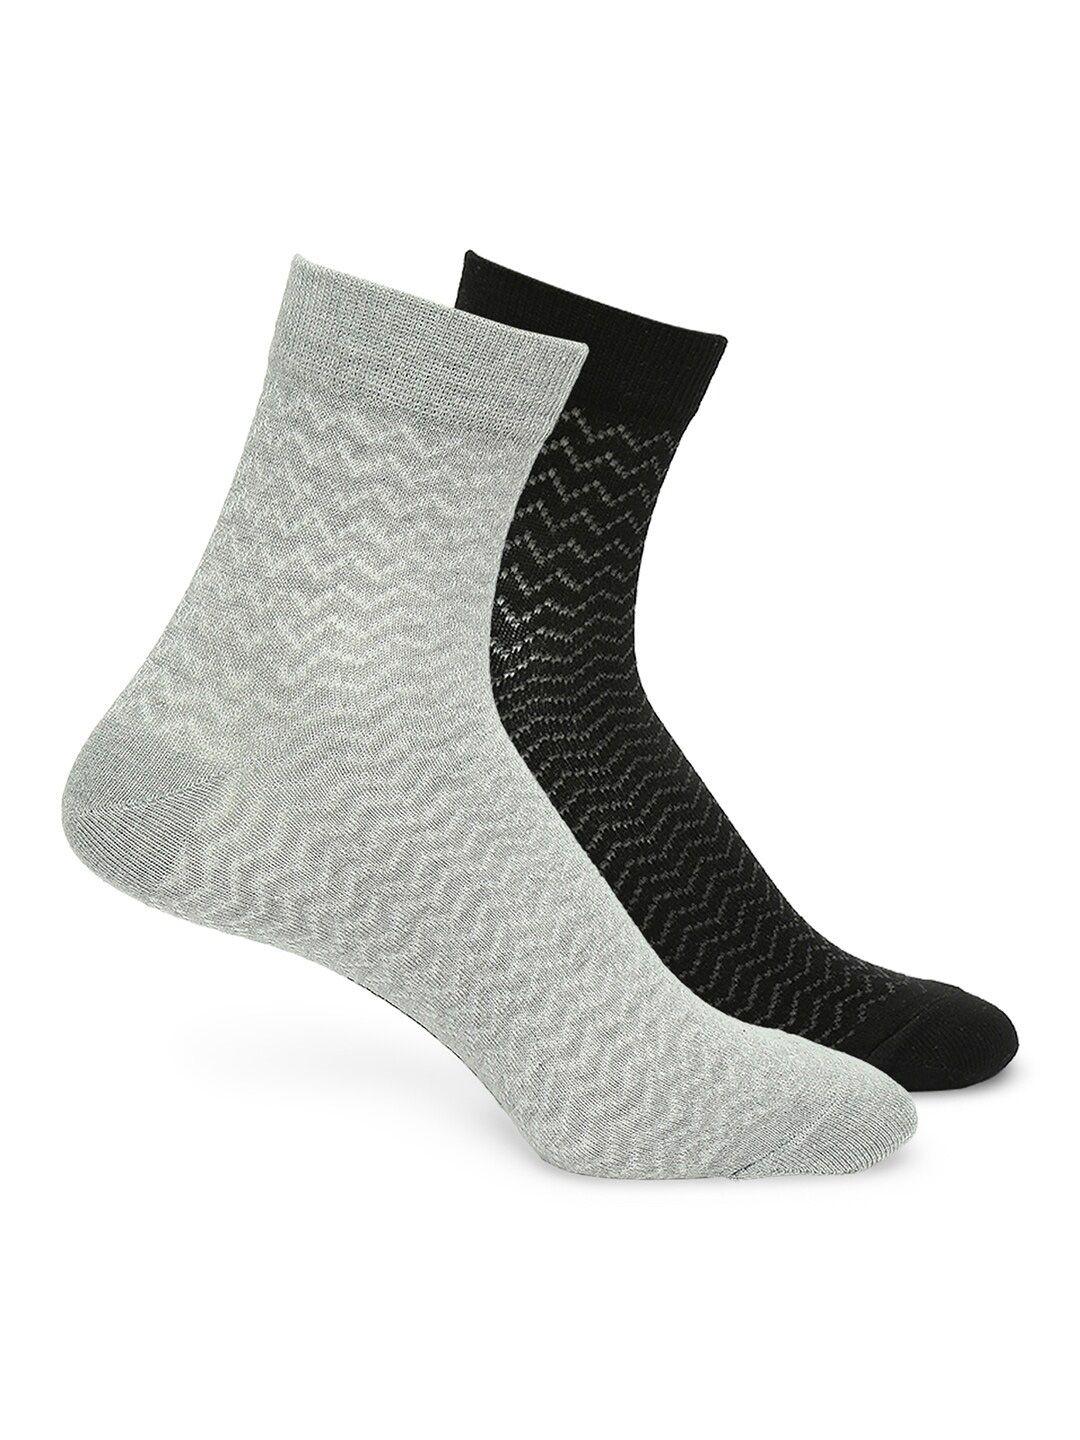 underjeans by spykar men pack of 2 patterned ankle length cotton socks